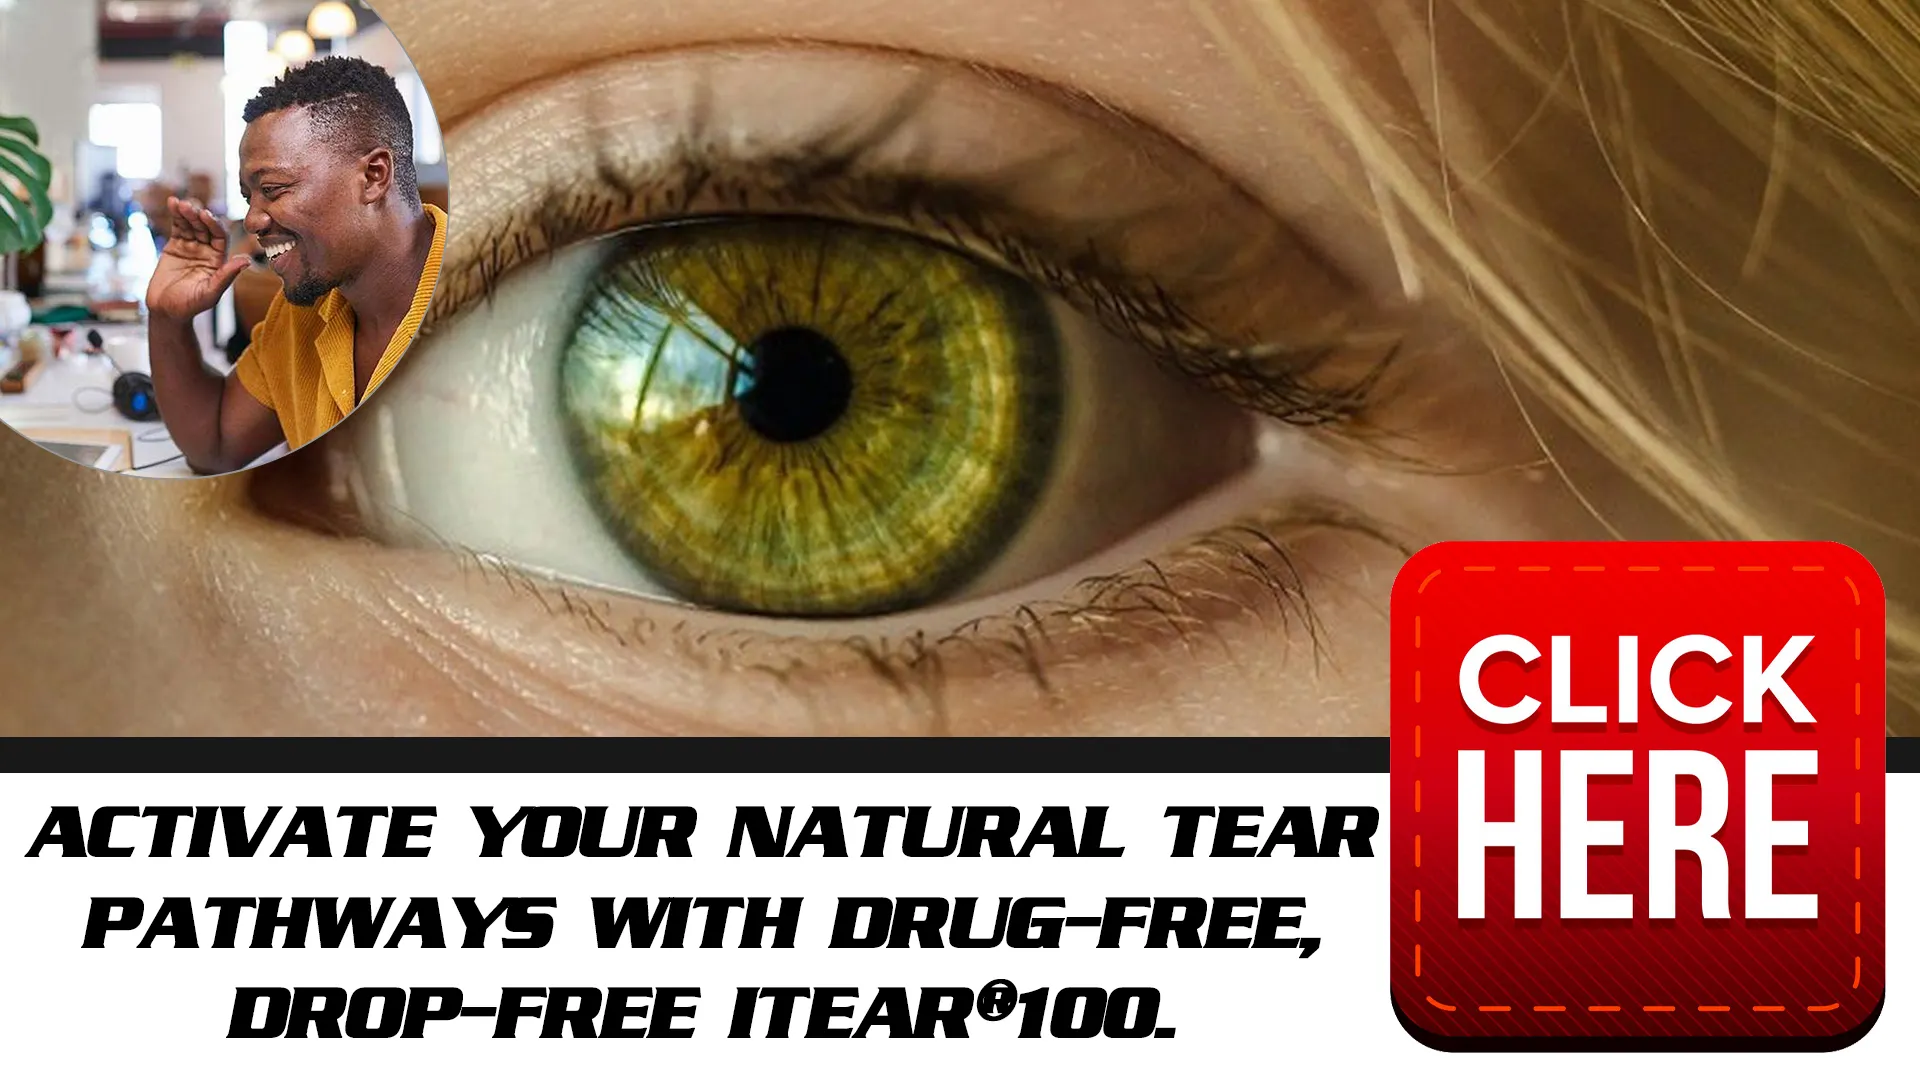 The iTEAR100 Experience: A Step Towards Healthy Eyes